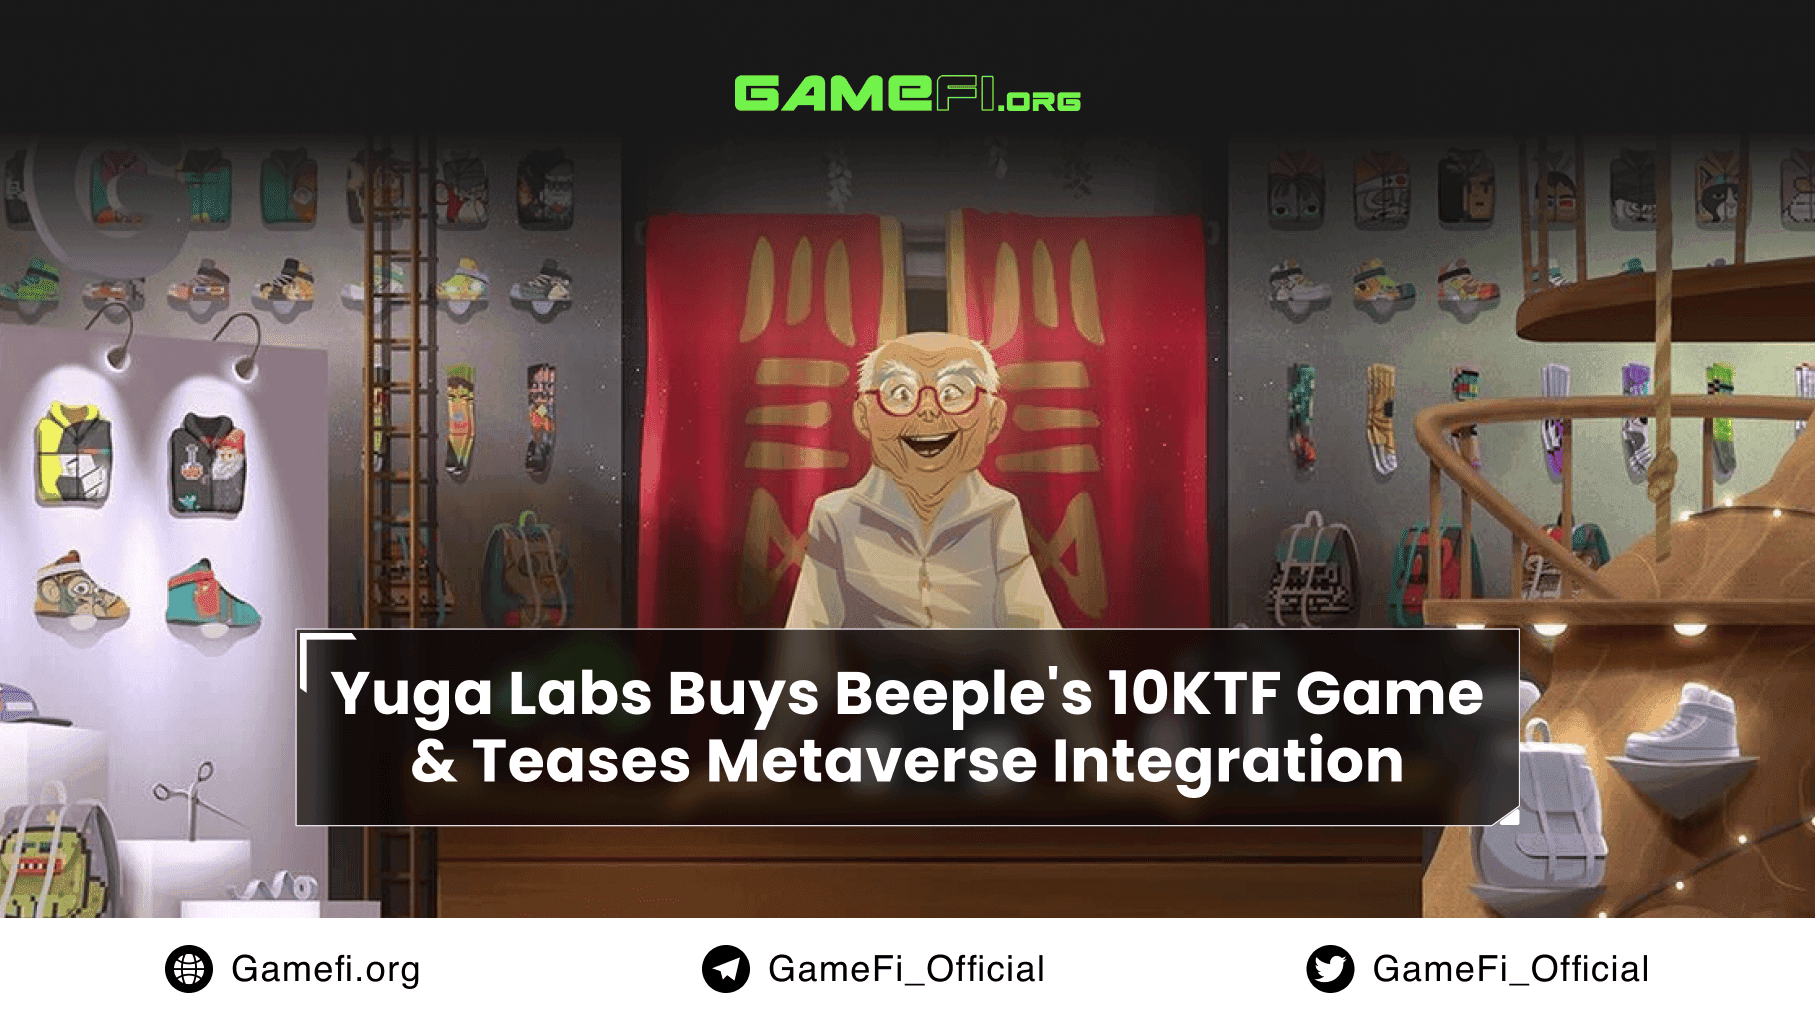 Yuga Labs Buys Beeple's 10KTF Game & Teases Metaverse Integration